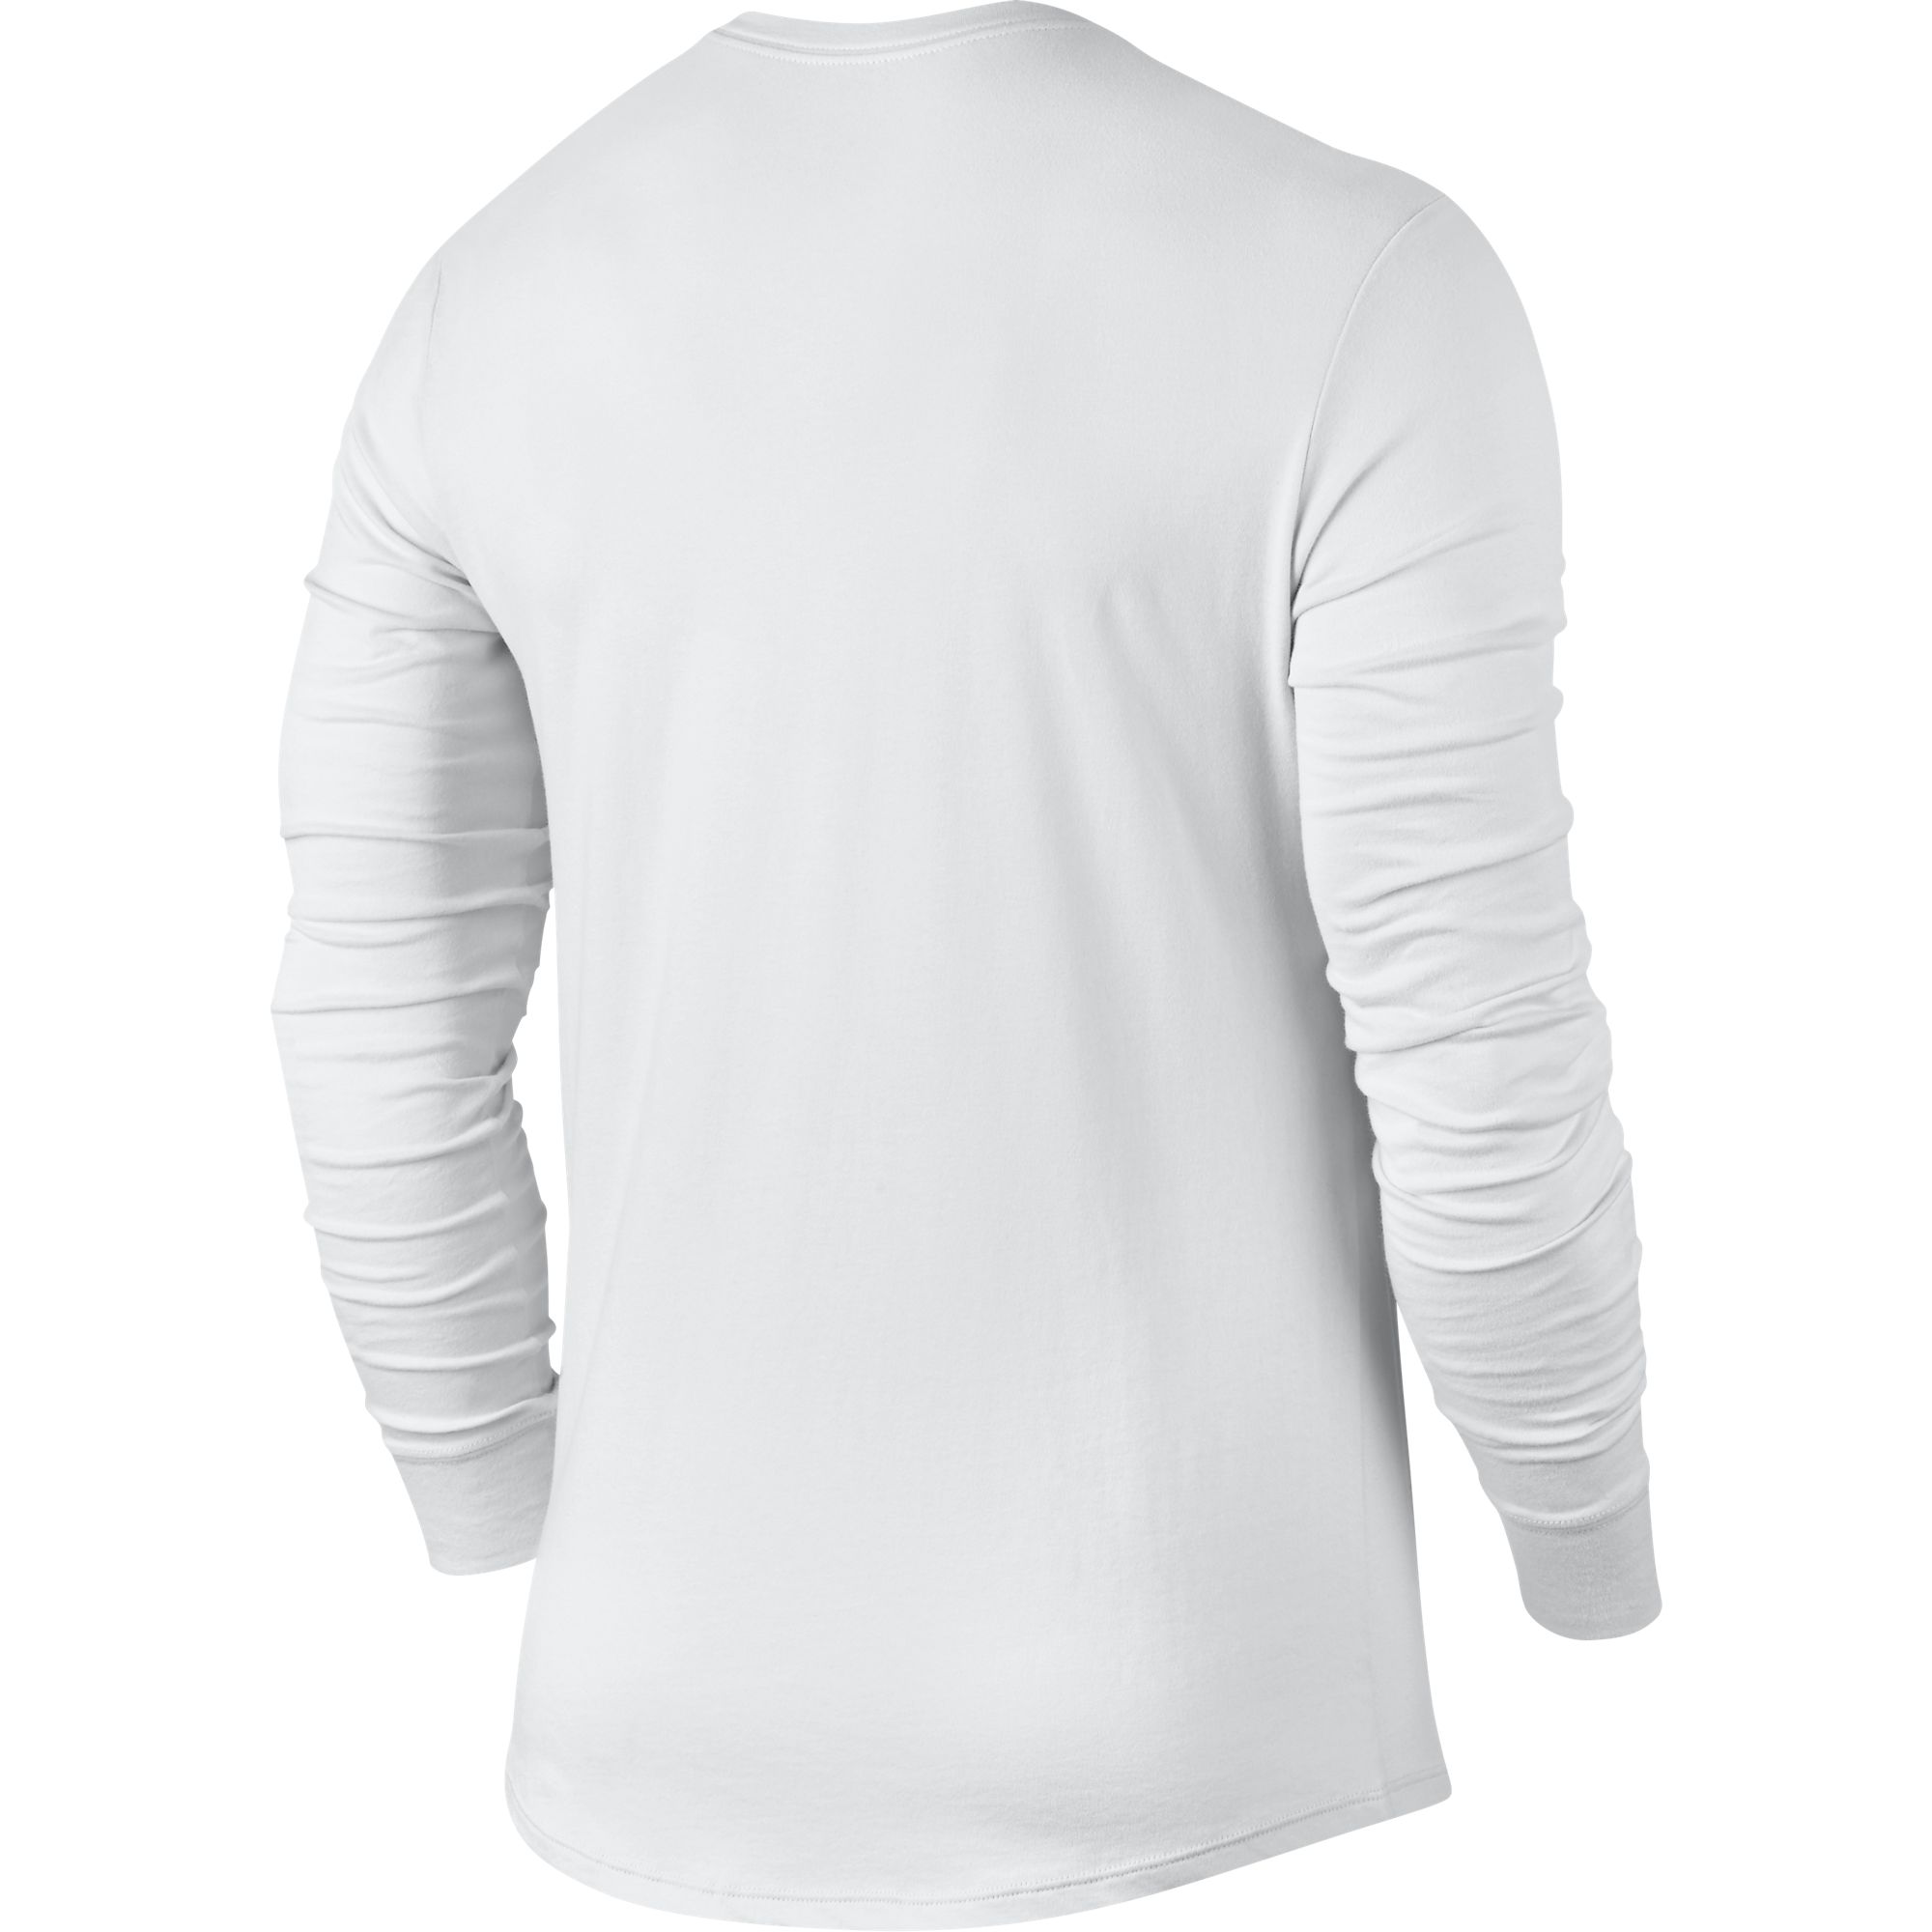  Air Jordan Crew Neck  Men s Long Sleeve T Shirt White 